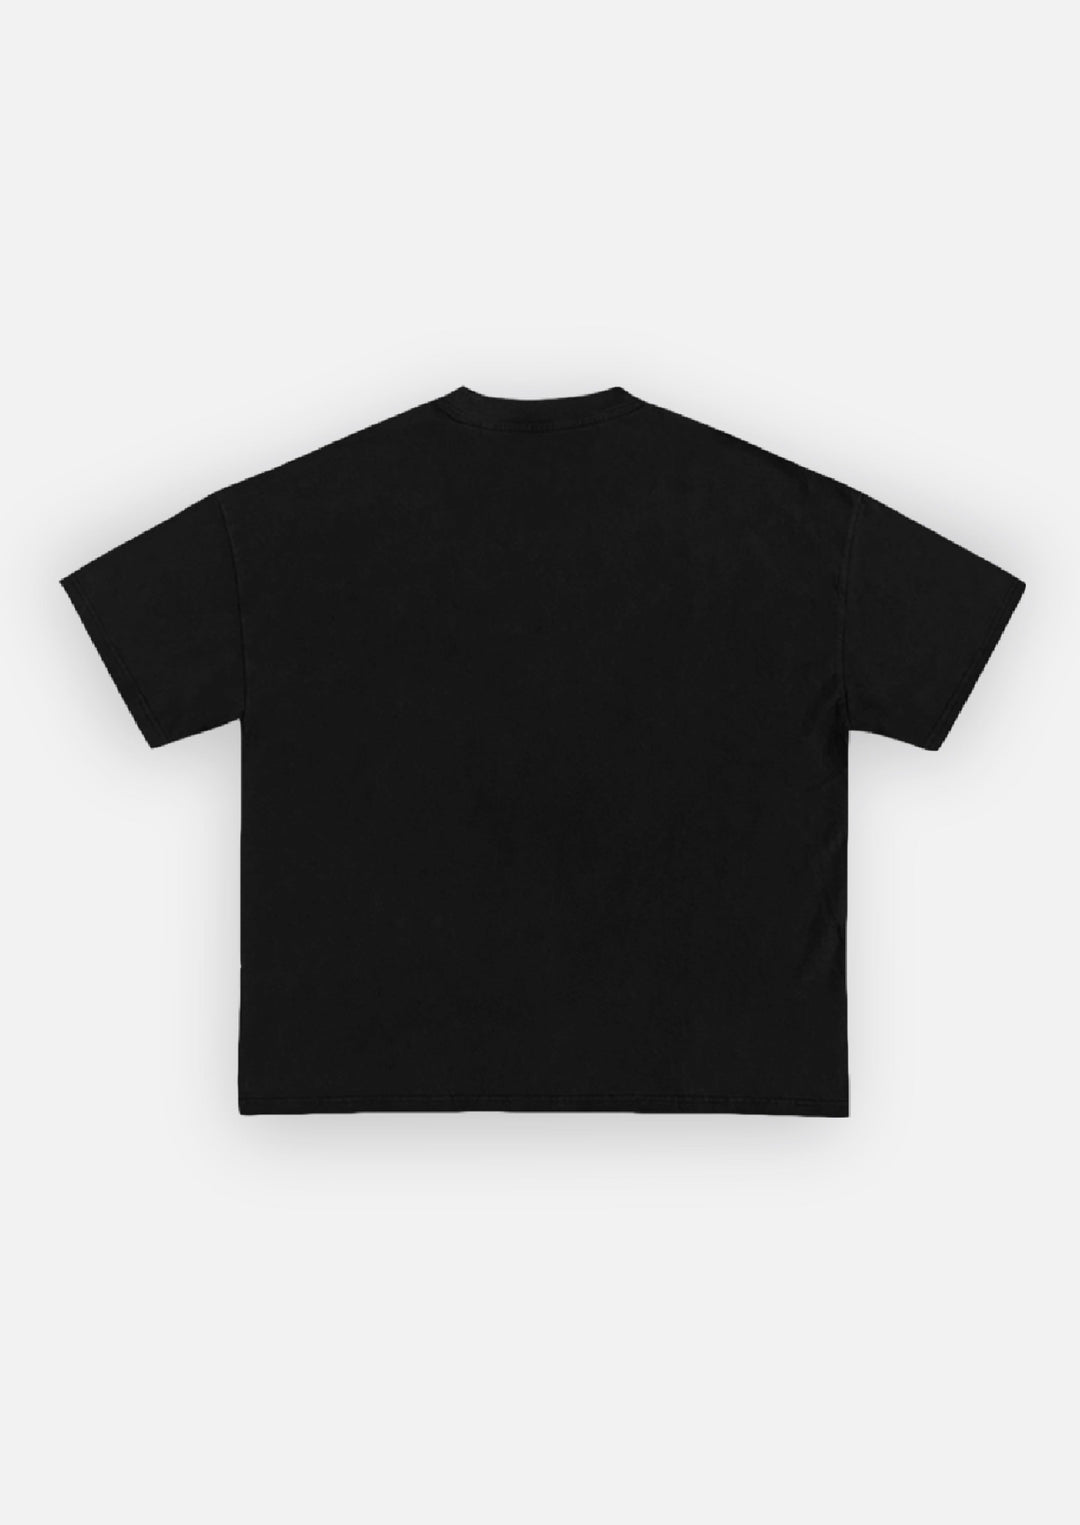 Diamond Cross Ranch Charger Black T-shirt 